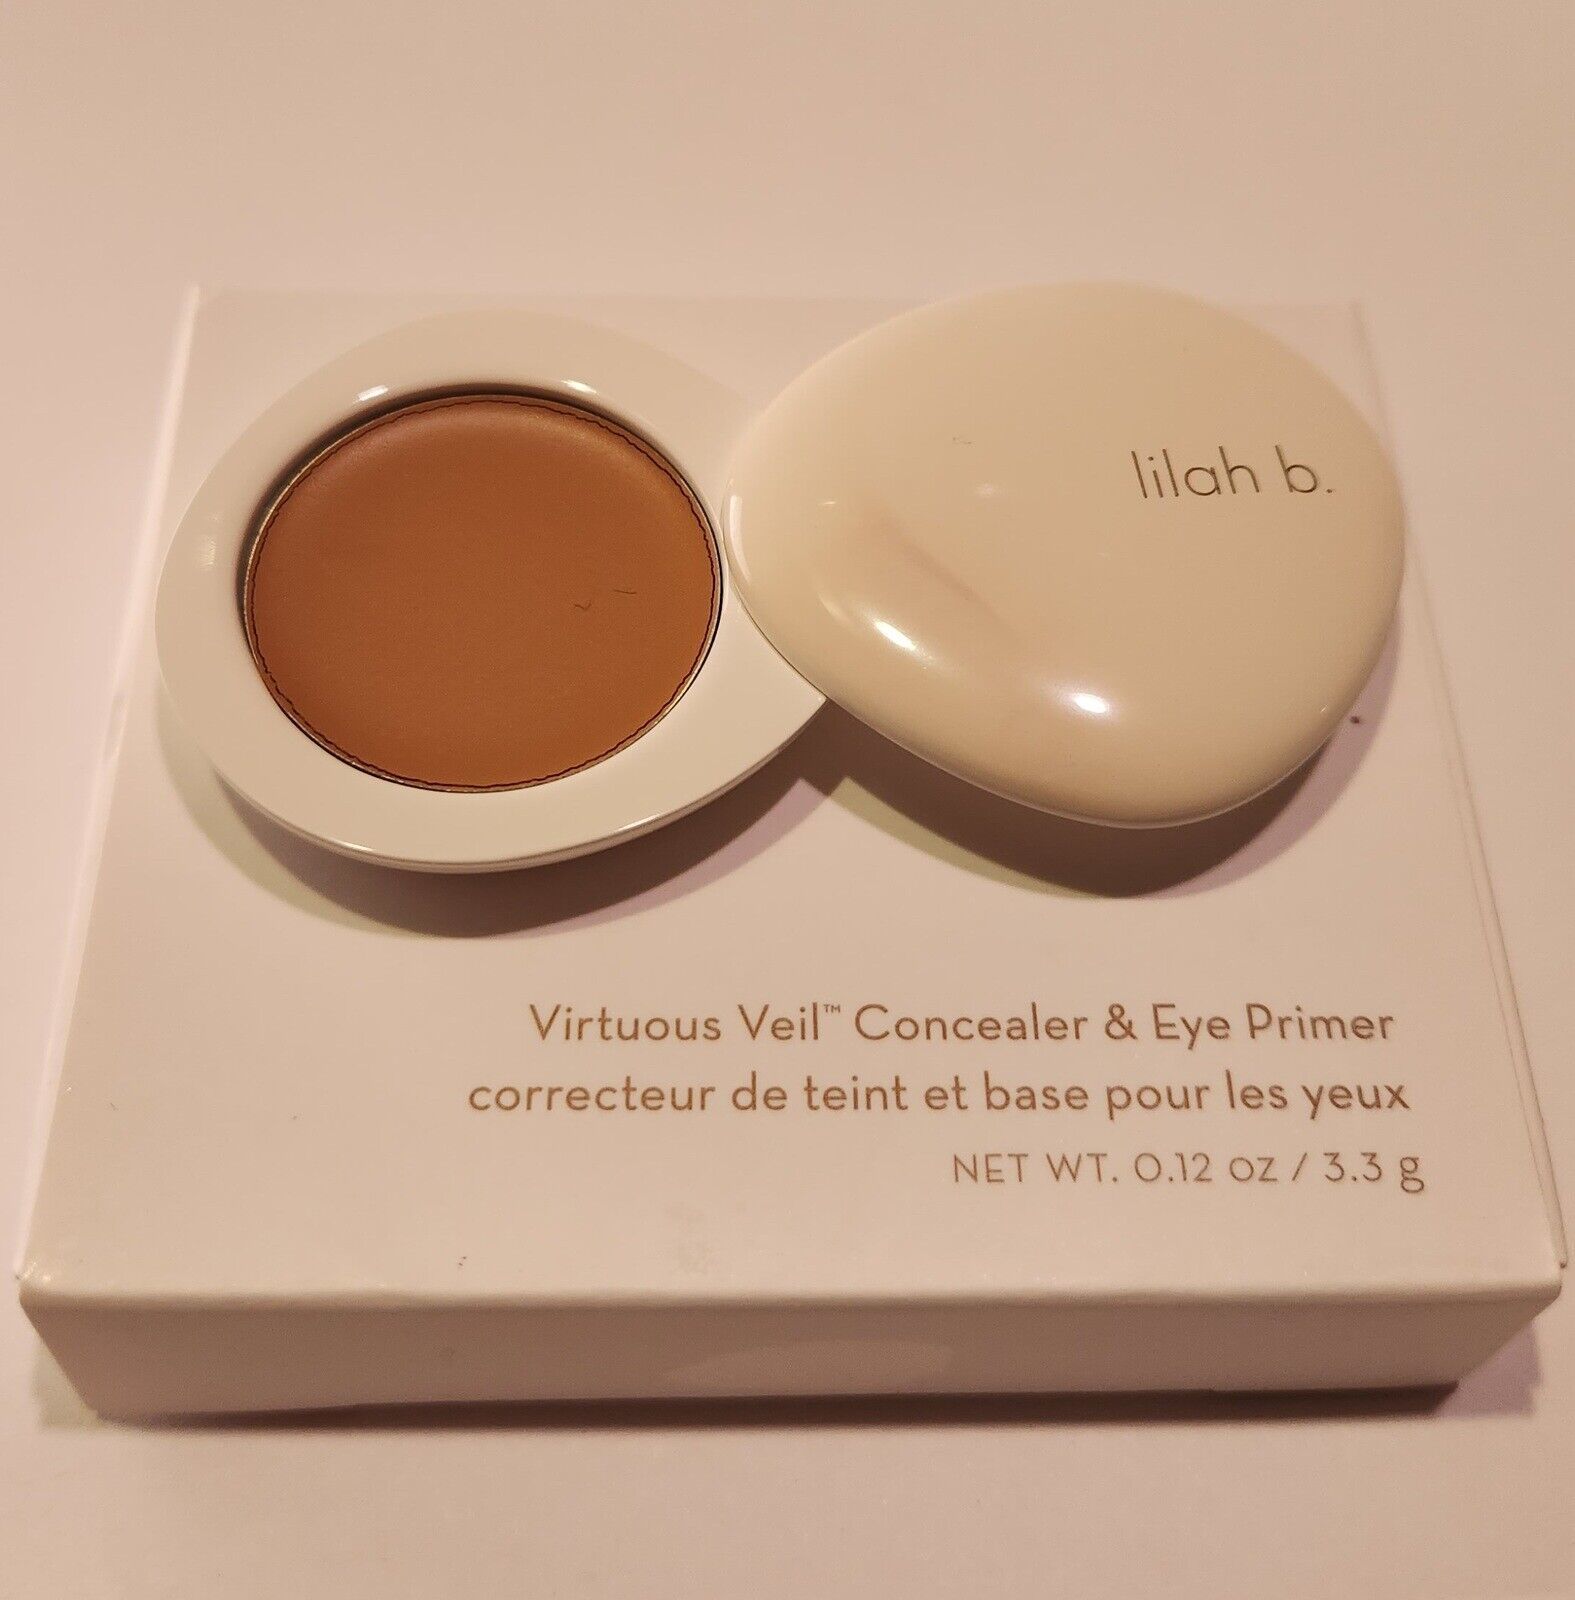 Primary image for lilah b. Virtuous Veil Concealer & Eye Primer, Shade: b. polished